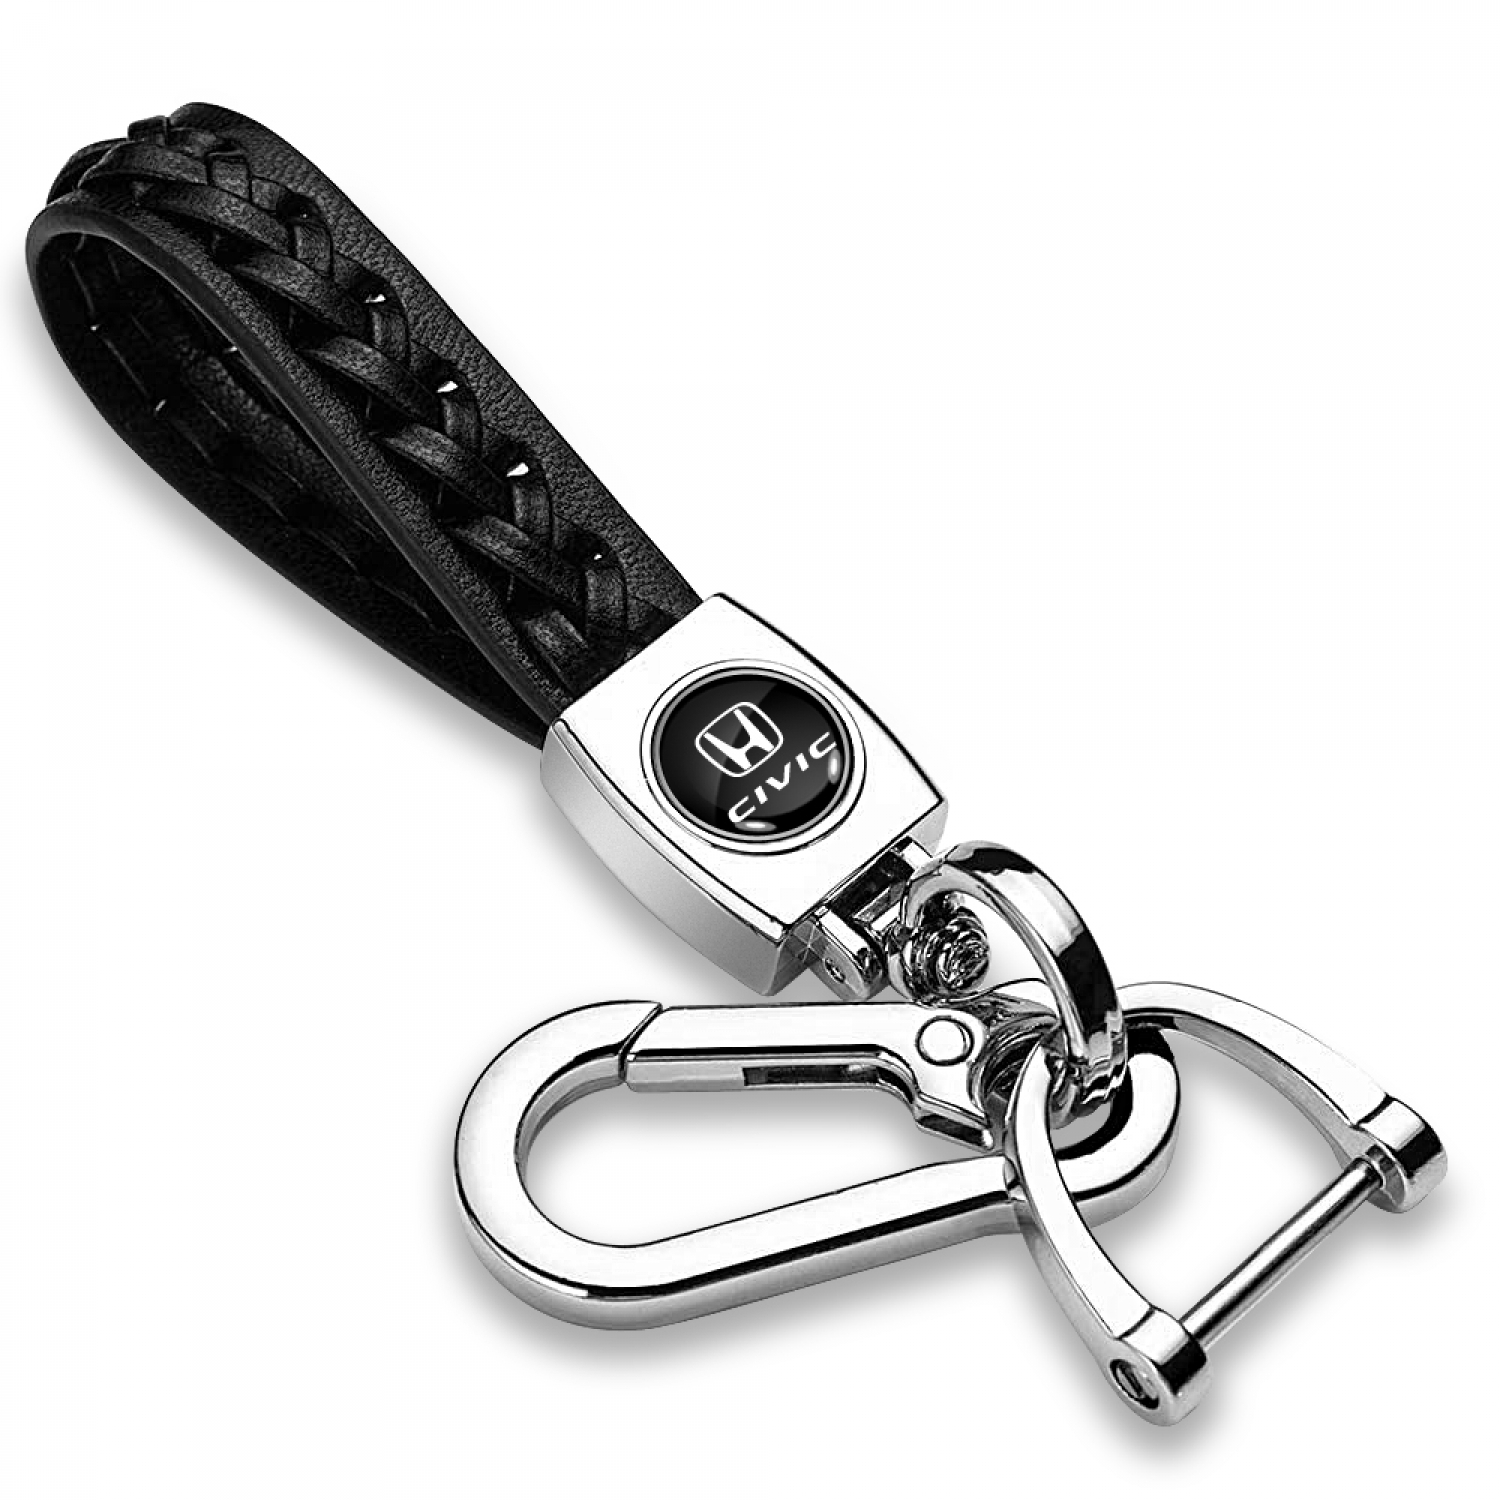 Honda Civic in Black Braided Rope Style Genuine Black Leather Chrome Hook Key Chain